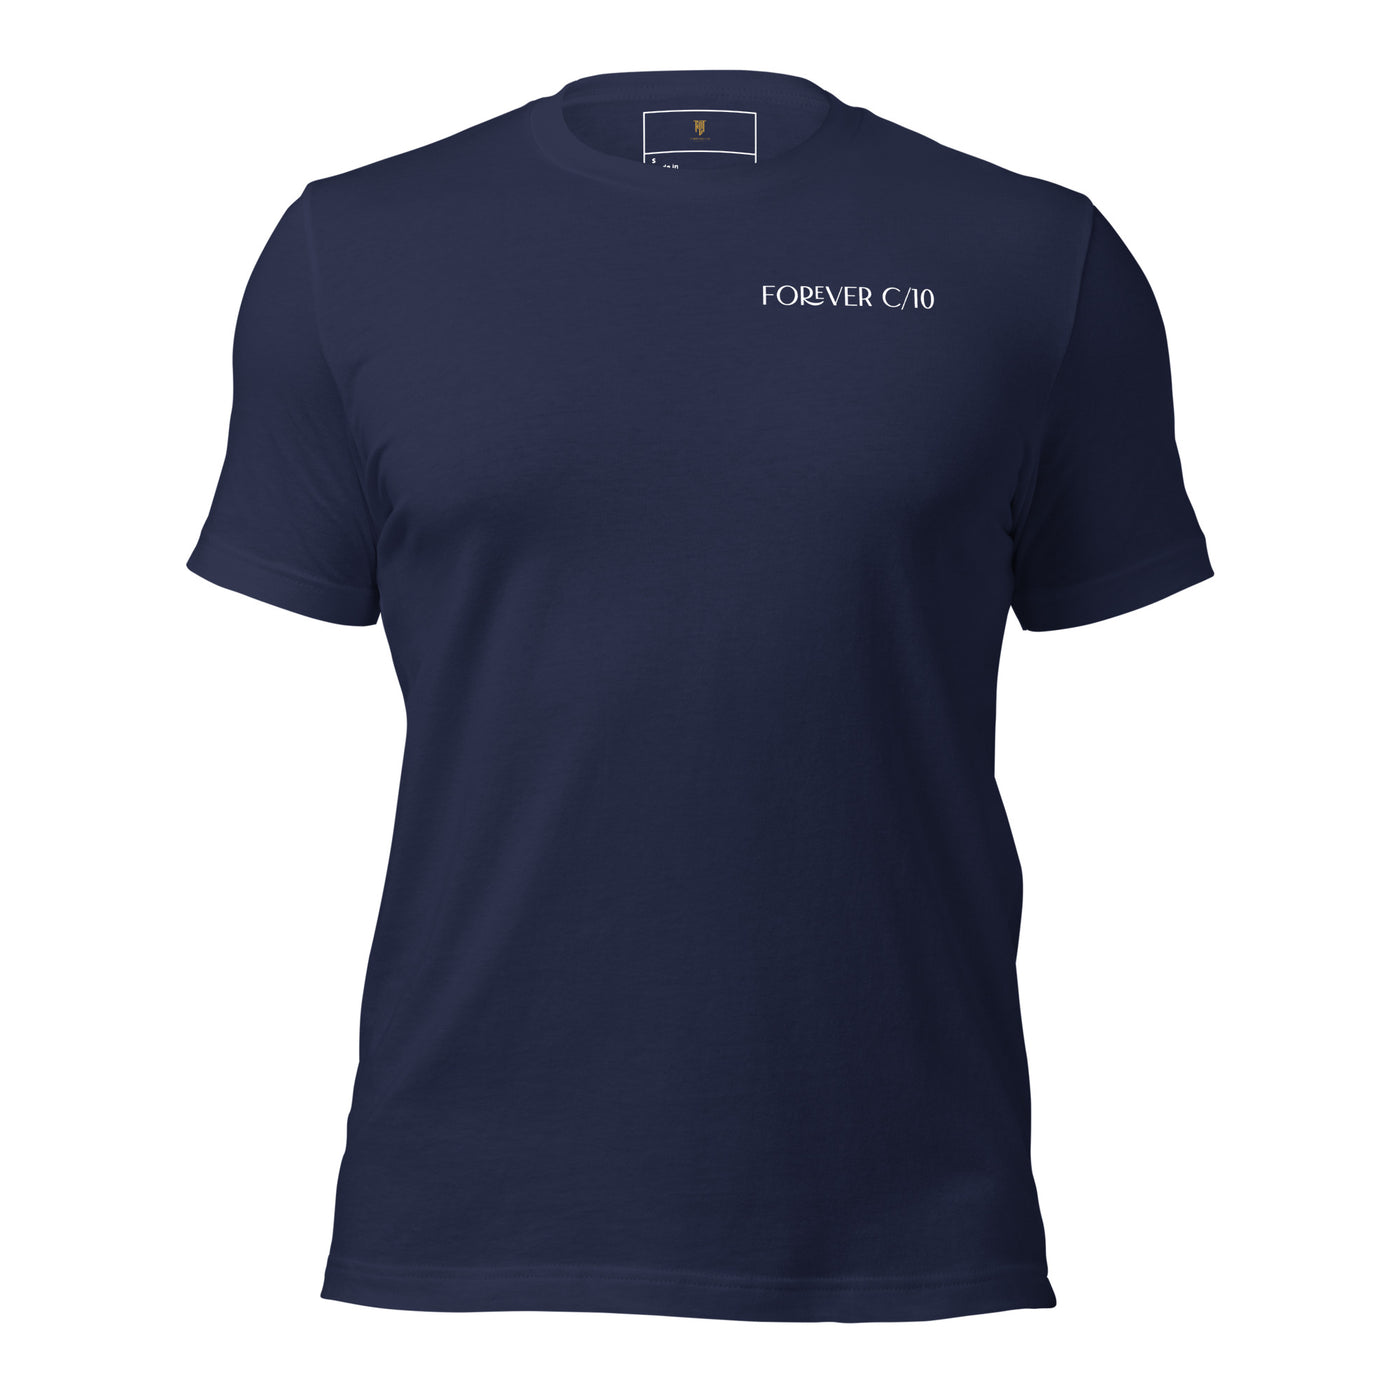 FOR EVERY MILE UNISEX T-SHIRT ( BACK PRINT ), Versatile Unisex T-Shirts, Gender-Neutral Tees, Stylish Unisex Tops, Fashionable Gender-Neutral ShirtsUnisex t-shirt